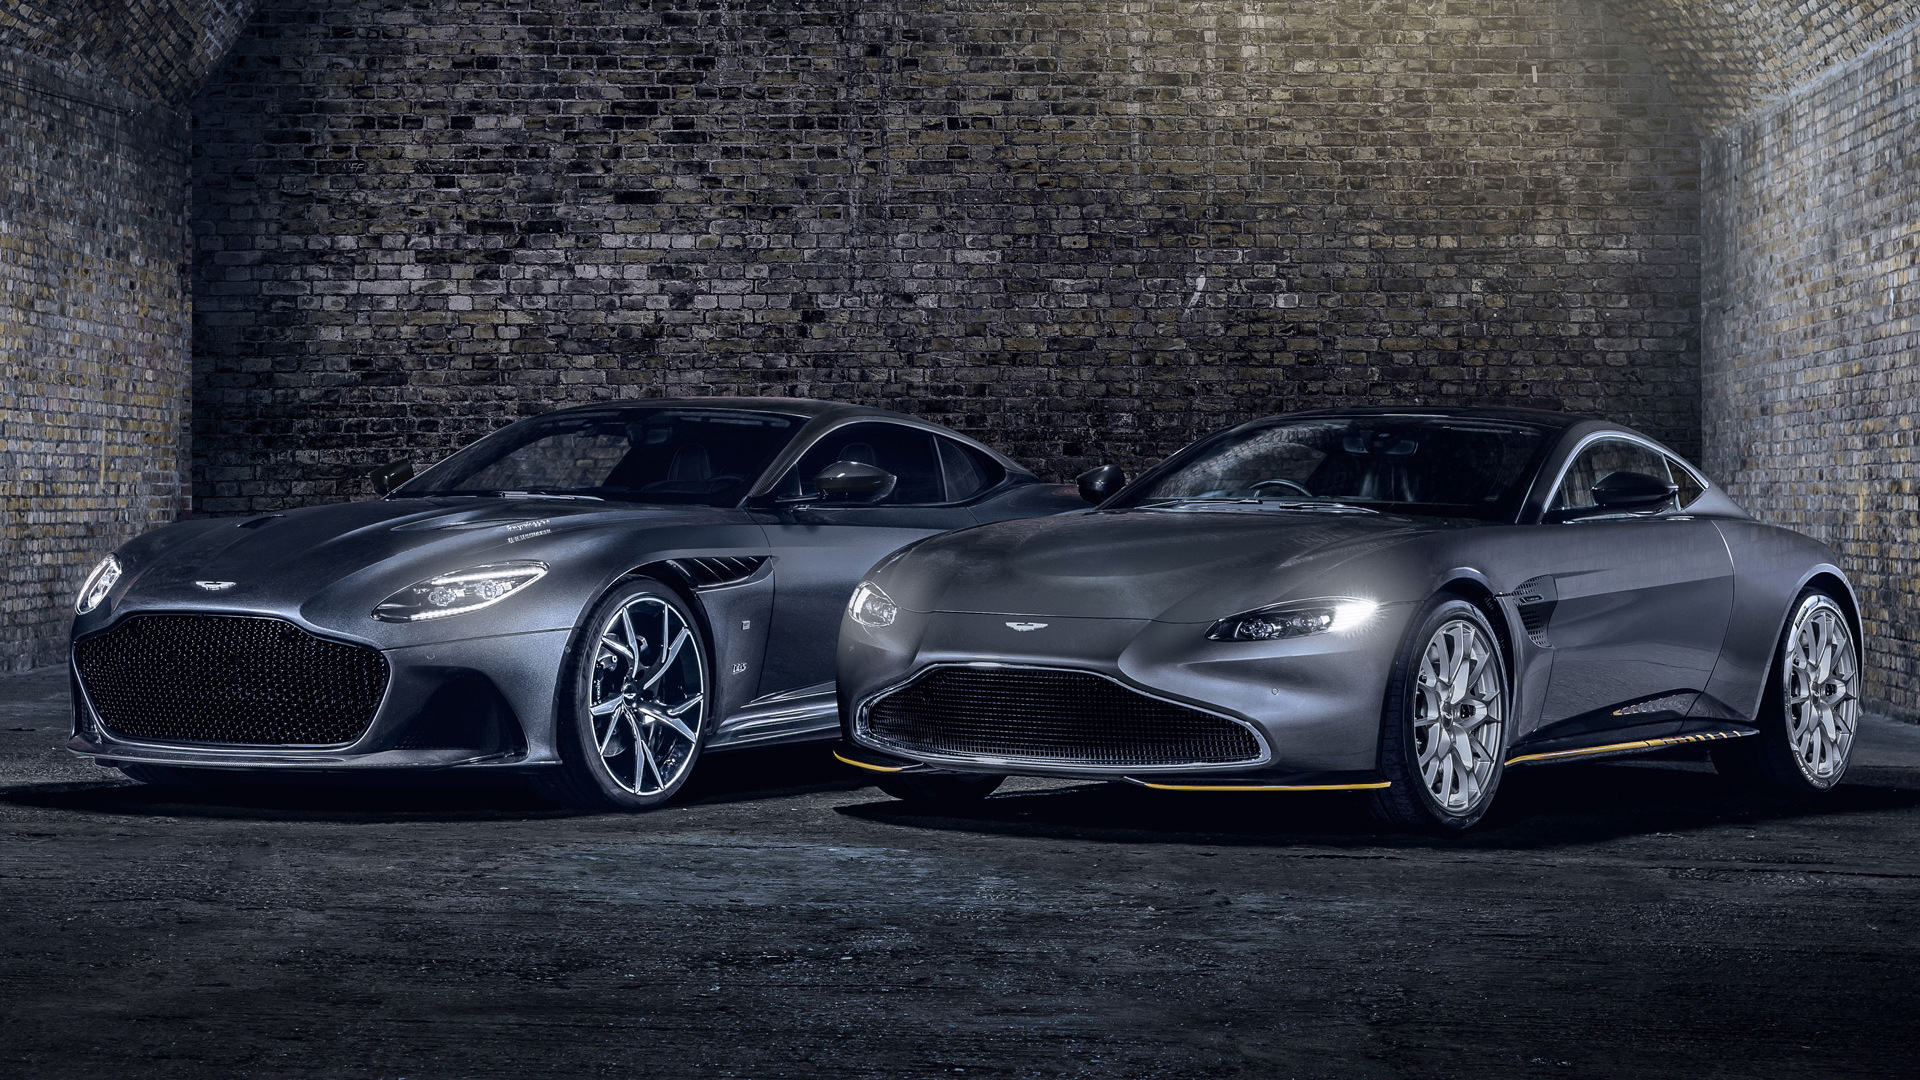 2021 Aston Martin DBS Superleggera 007 Edition and Vantage 007 Edition